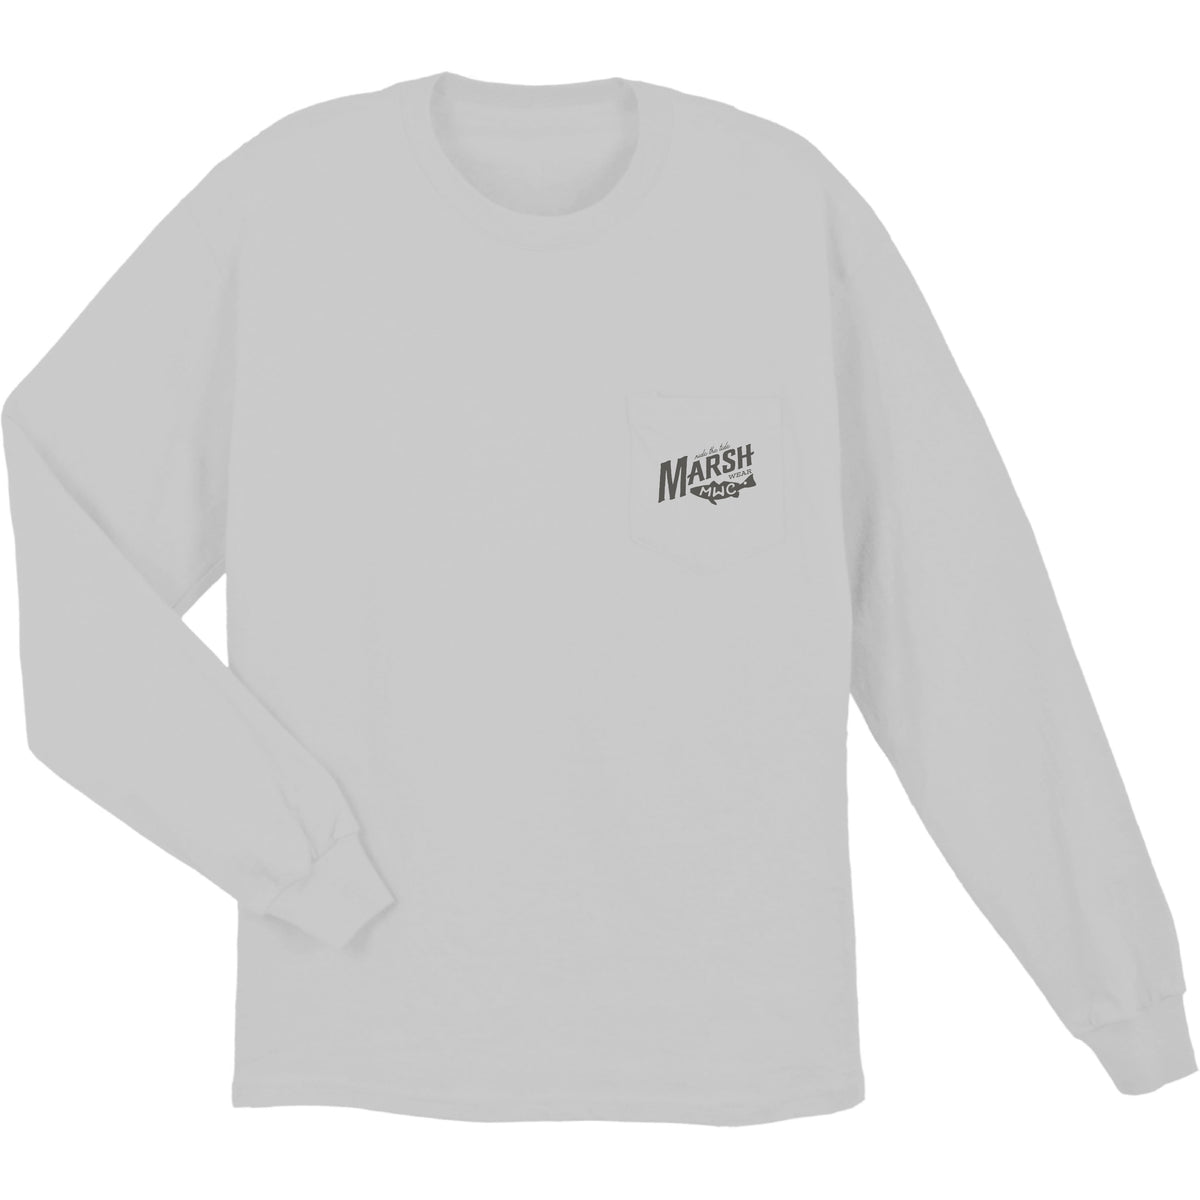 Marsh Wear Sunrise Marsh Long Sleeve T-Shirt